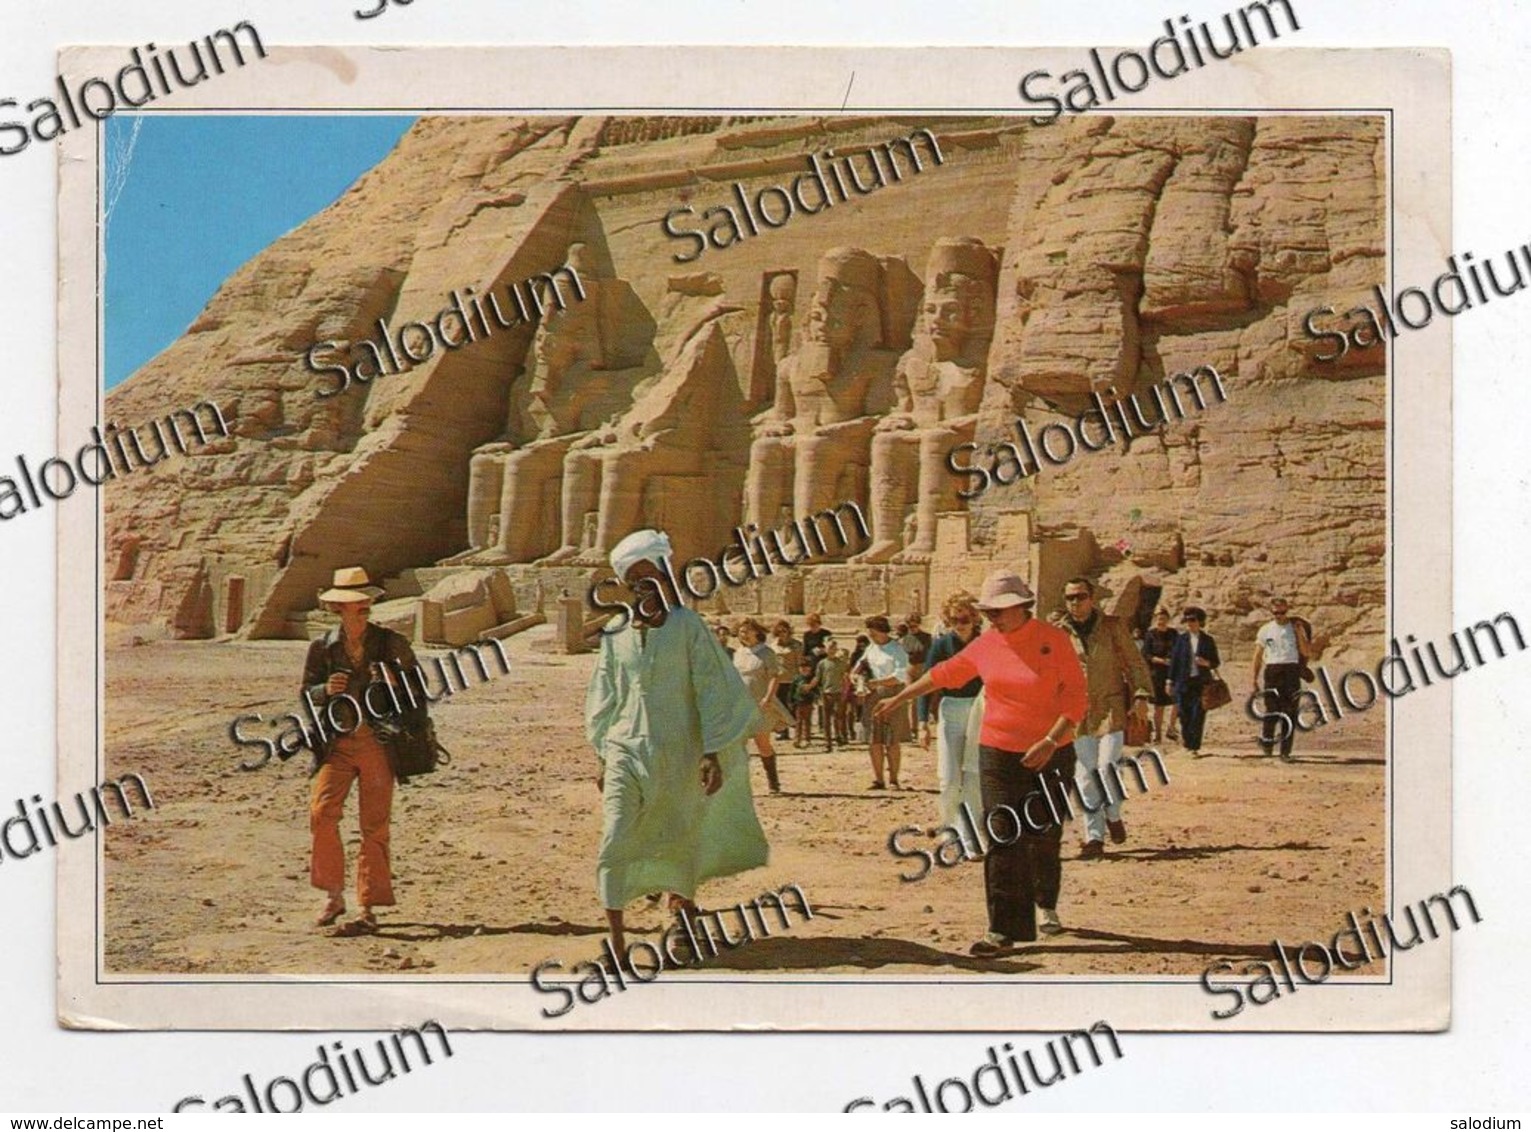 Abou Simbel Rock Temple Of Ramses II - EGYPT EGITTO - Storia Postale - XXL Card - Big Format - Abu Simbel Temples